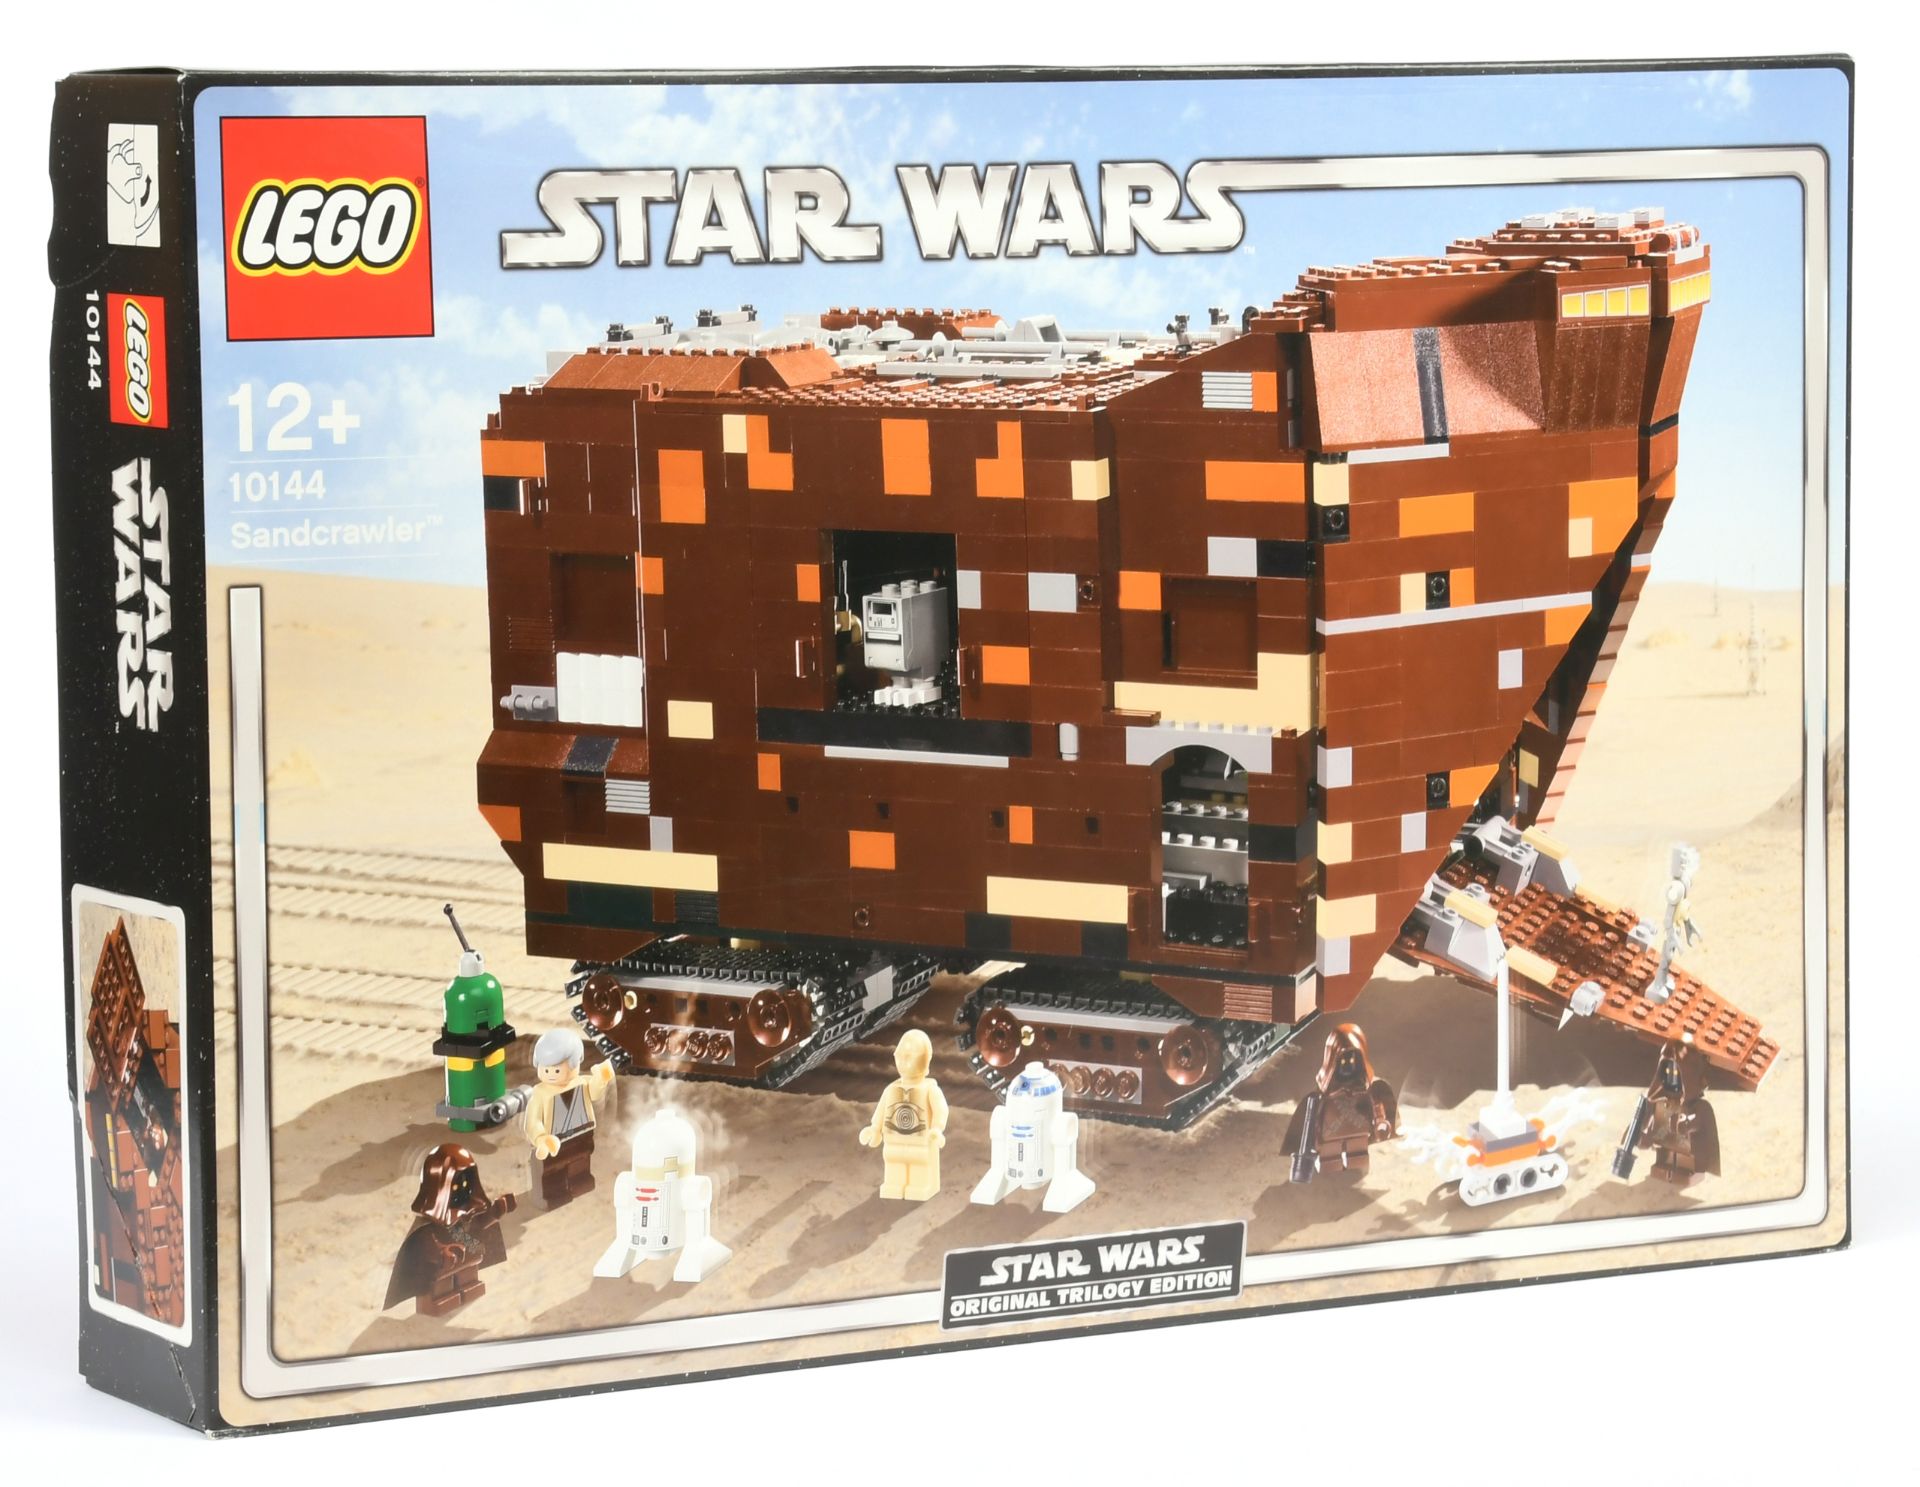 Lego Star Wars 10144 Sandcrawler Star - Wars Original Trilogy Edition - 2005 Issue, within Near M...